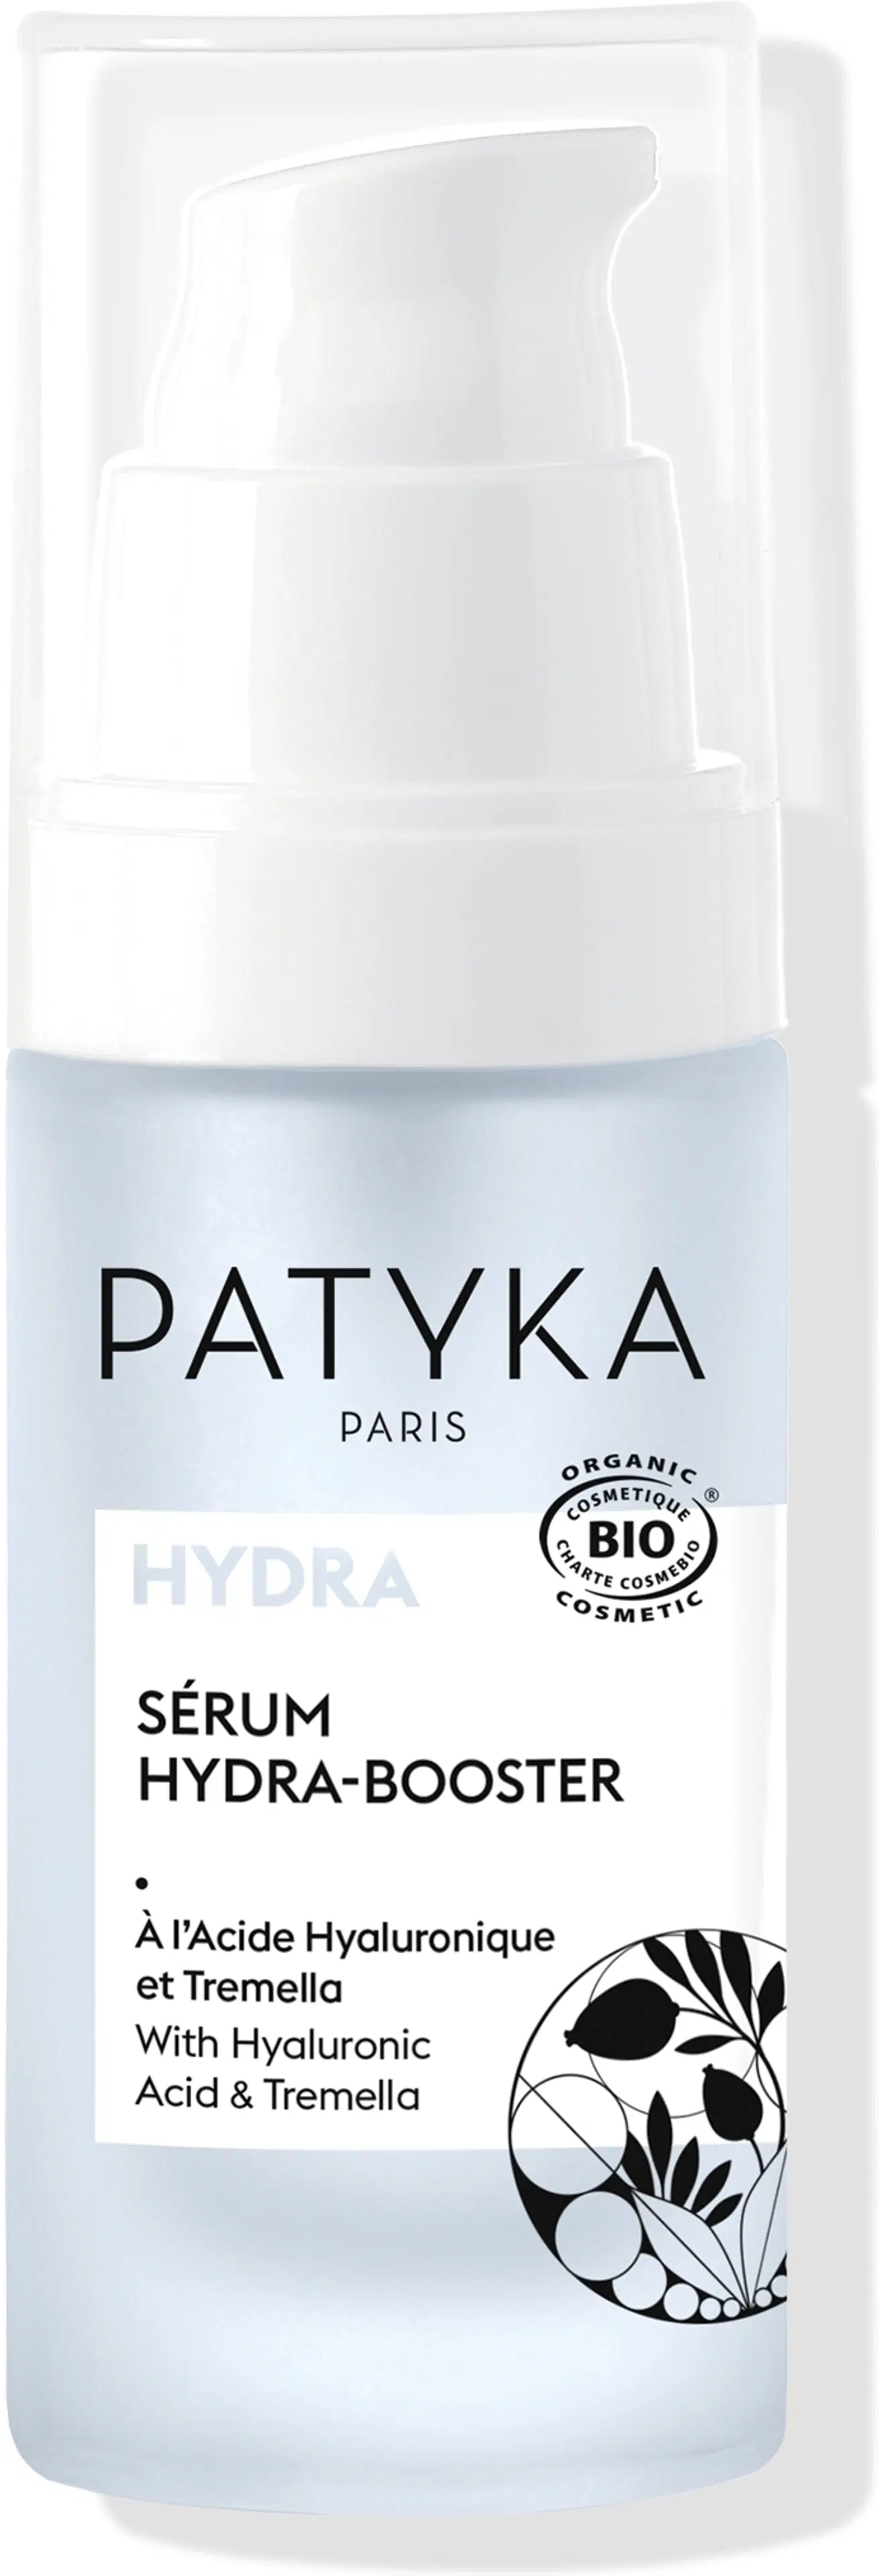 Patyka Hydra-Booster Seerumi 30ml